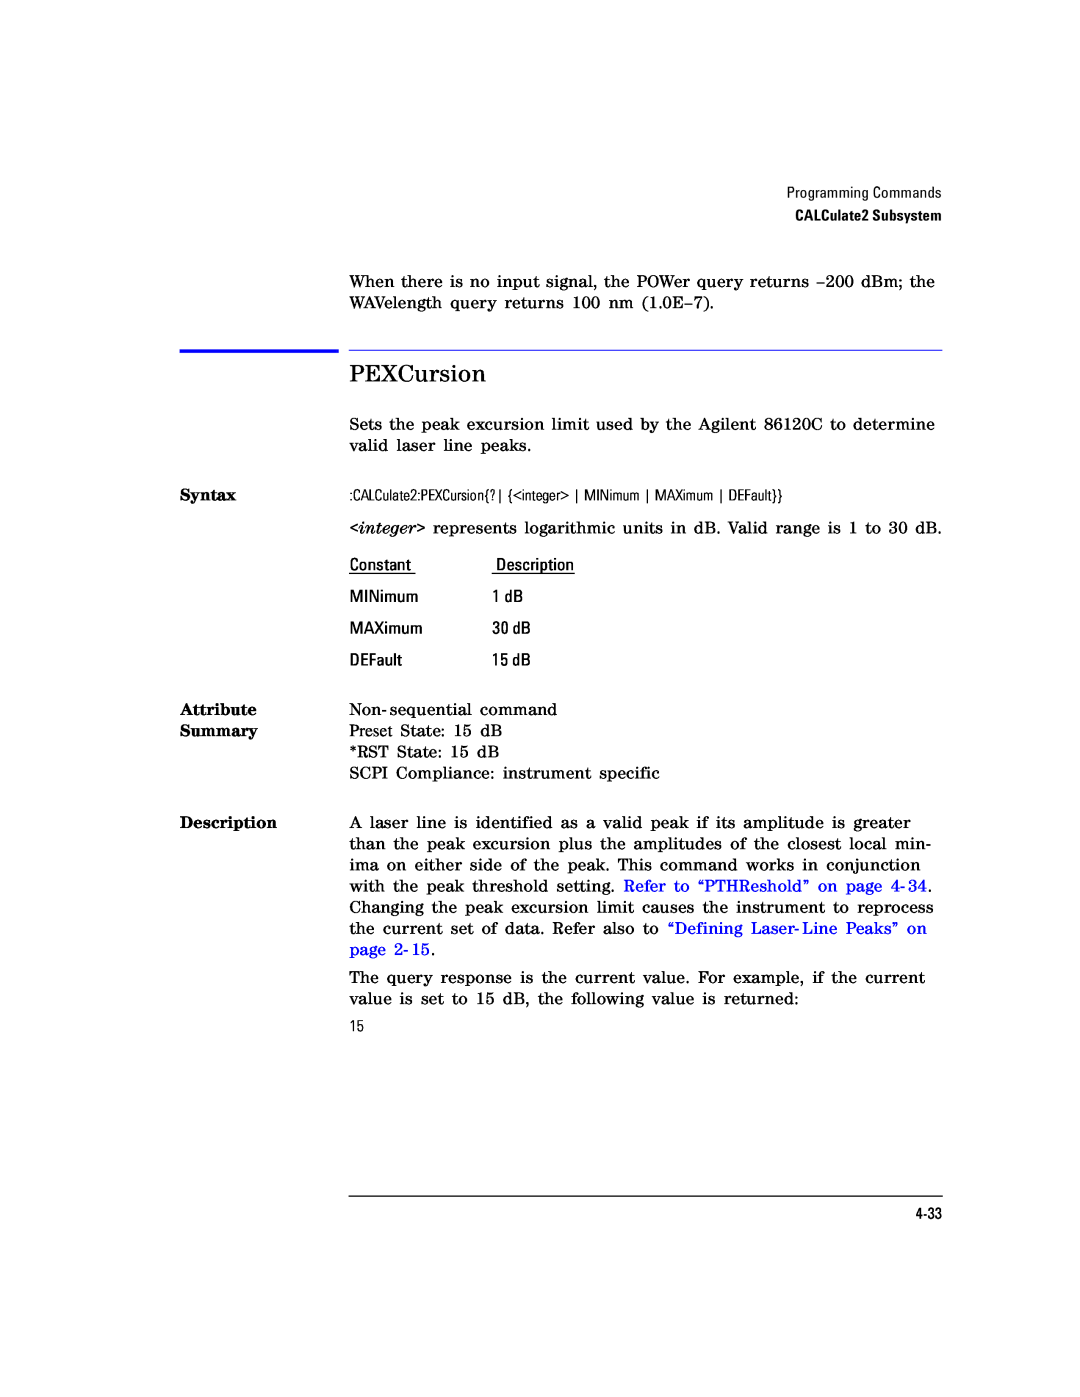 Agilent Technologies Agilent 86120C manual PEXCursion, Syntax, Attribute, Summary, Description, page 2 